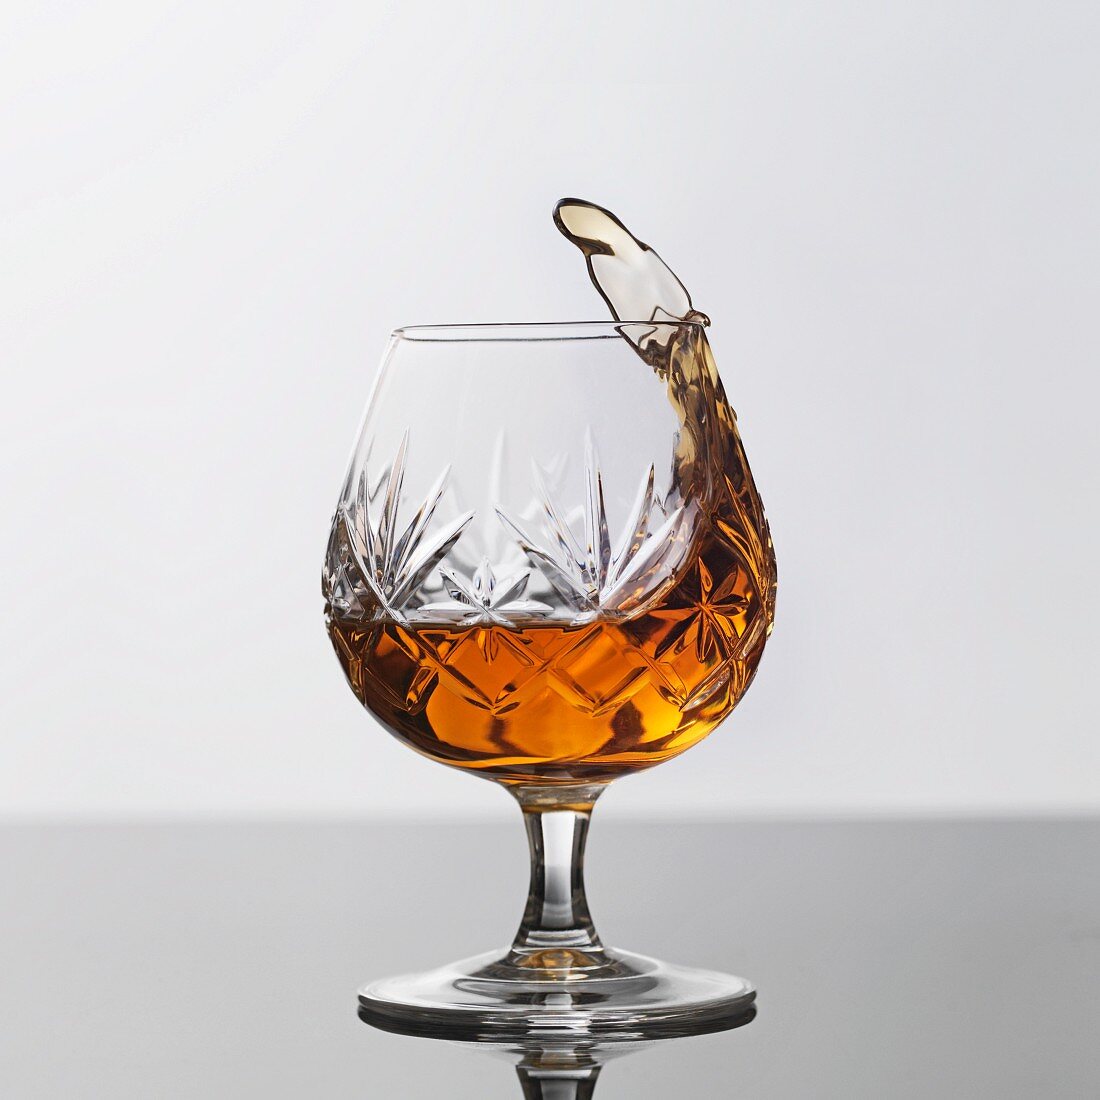 A glass of brandy